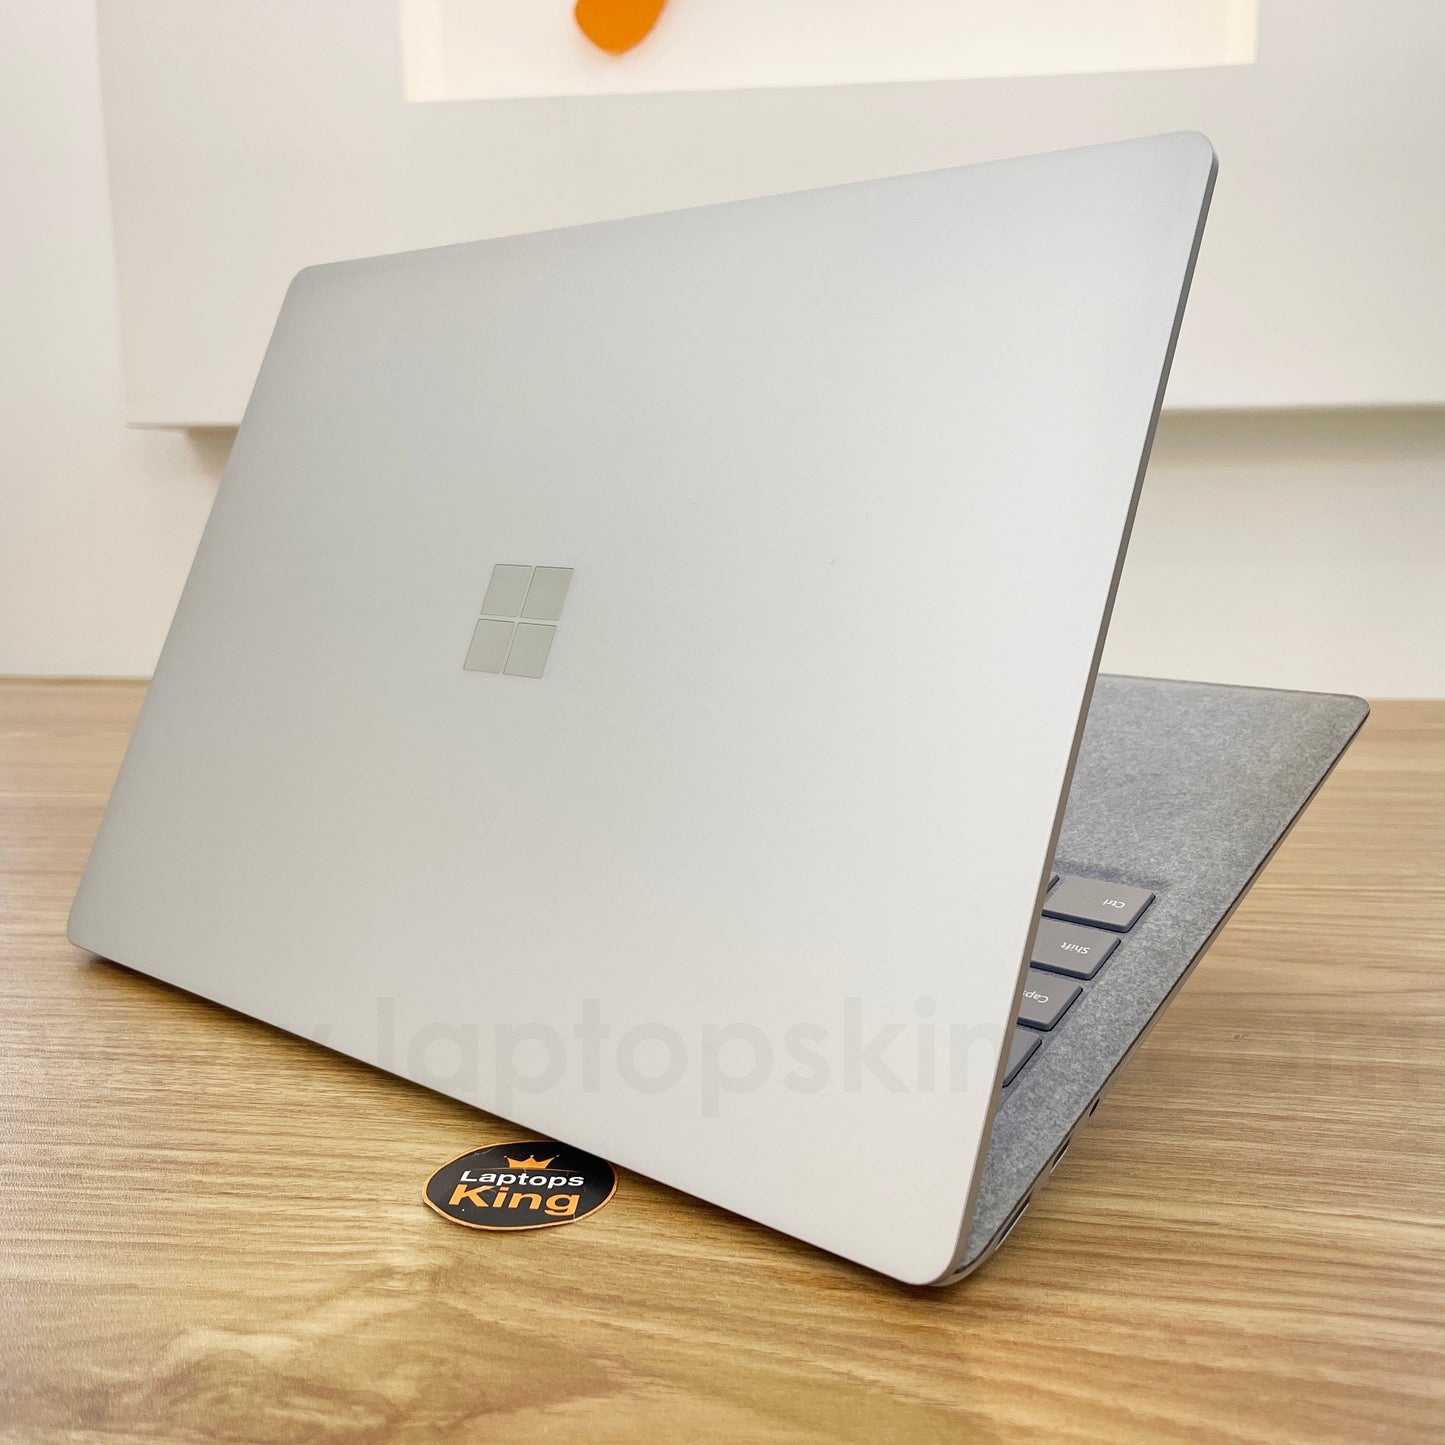 Microsoft Surface 2 Core i5-8350u 2K Pixel Sense Touch Laptop Offer (New OB)